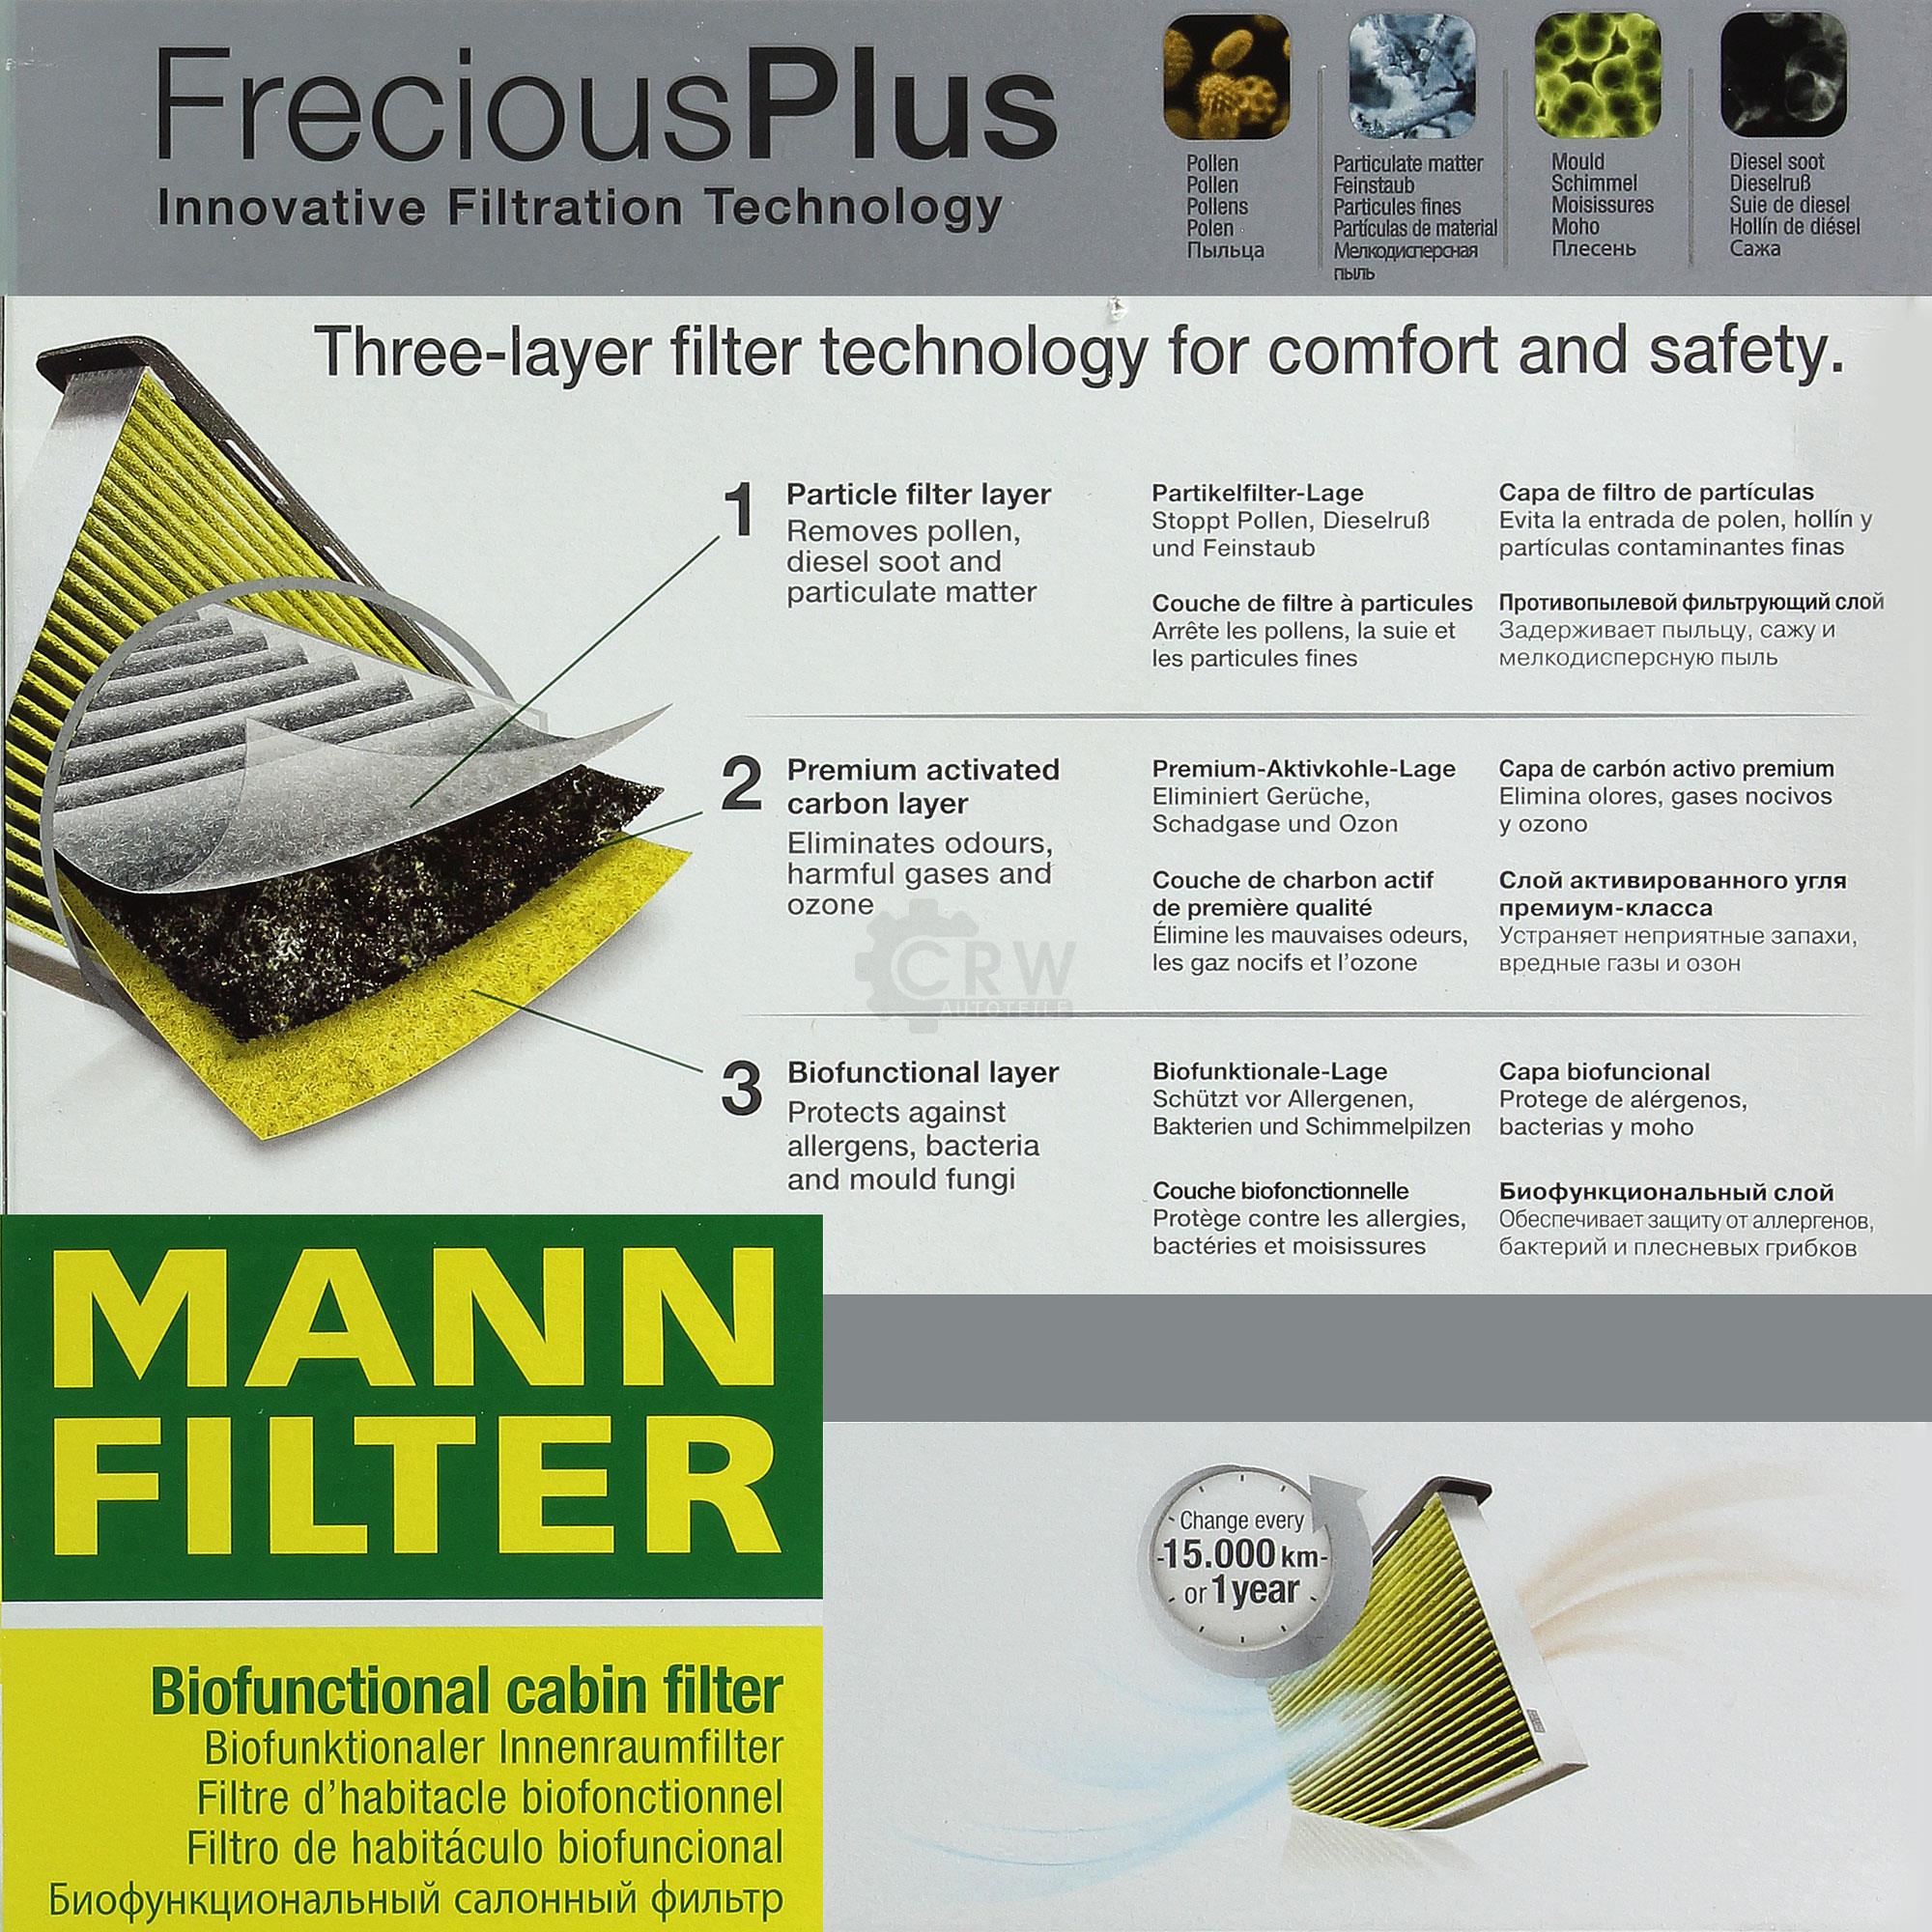 MANN-Filter Innenraumfilter Biofunctional für Allergiker FP 26 010